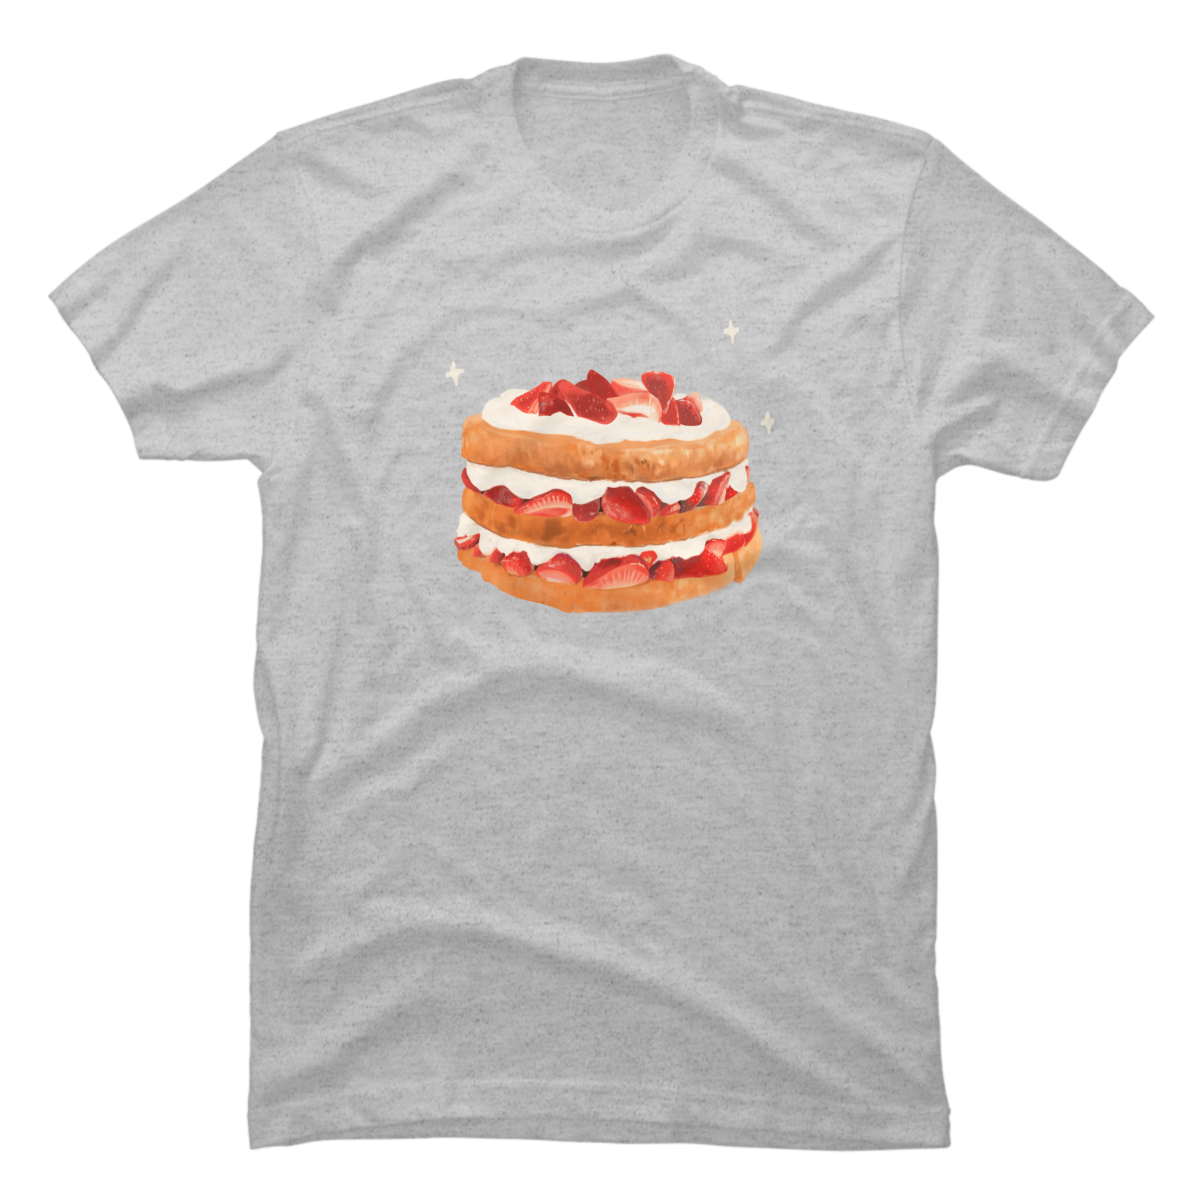 strawberry shortcake tee shirts